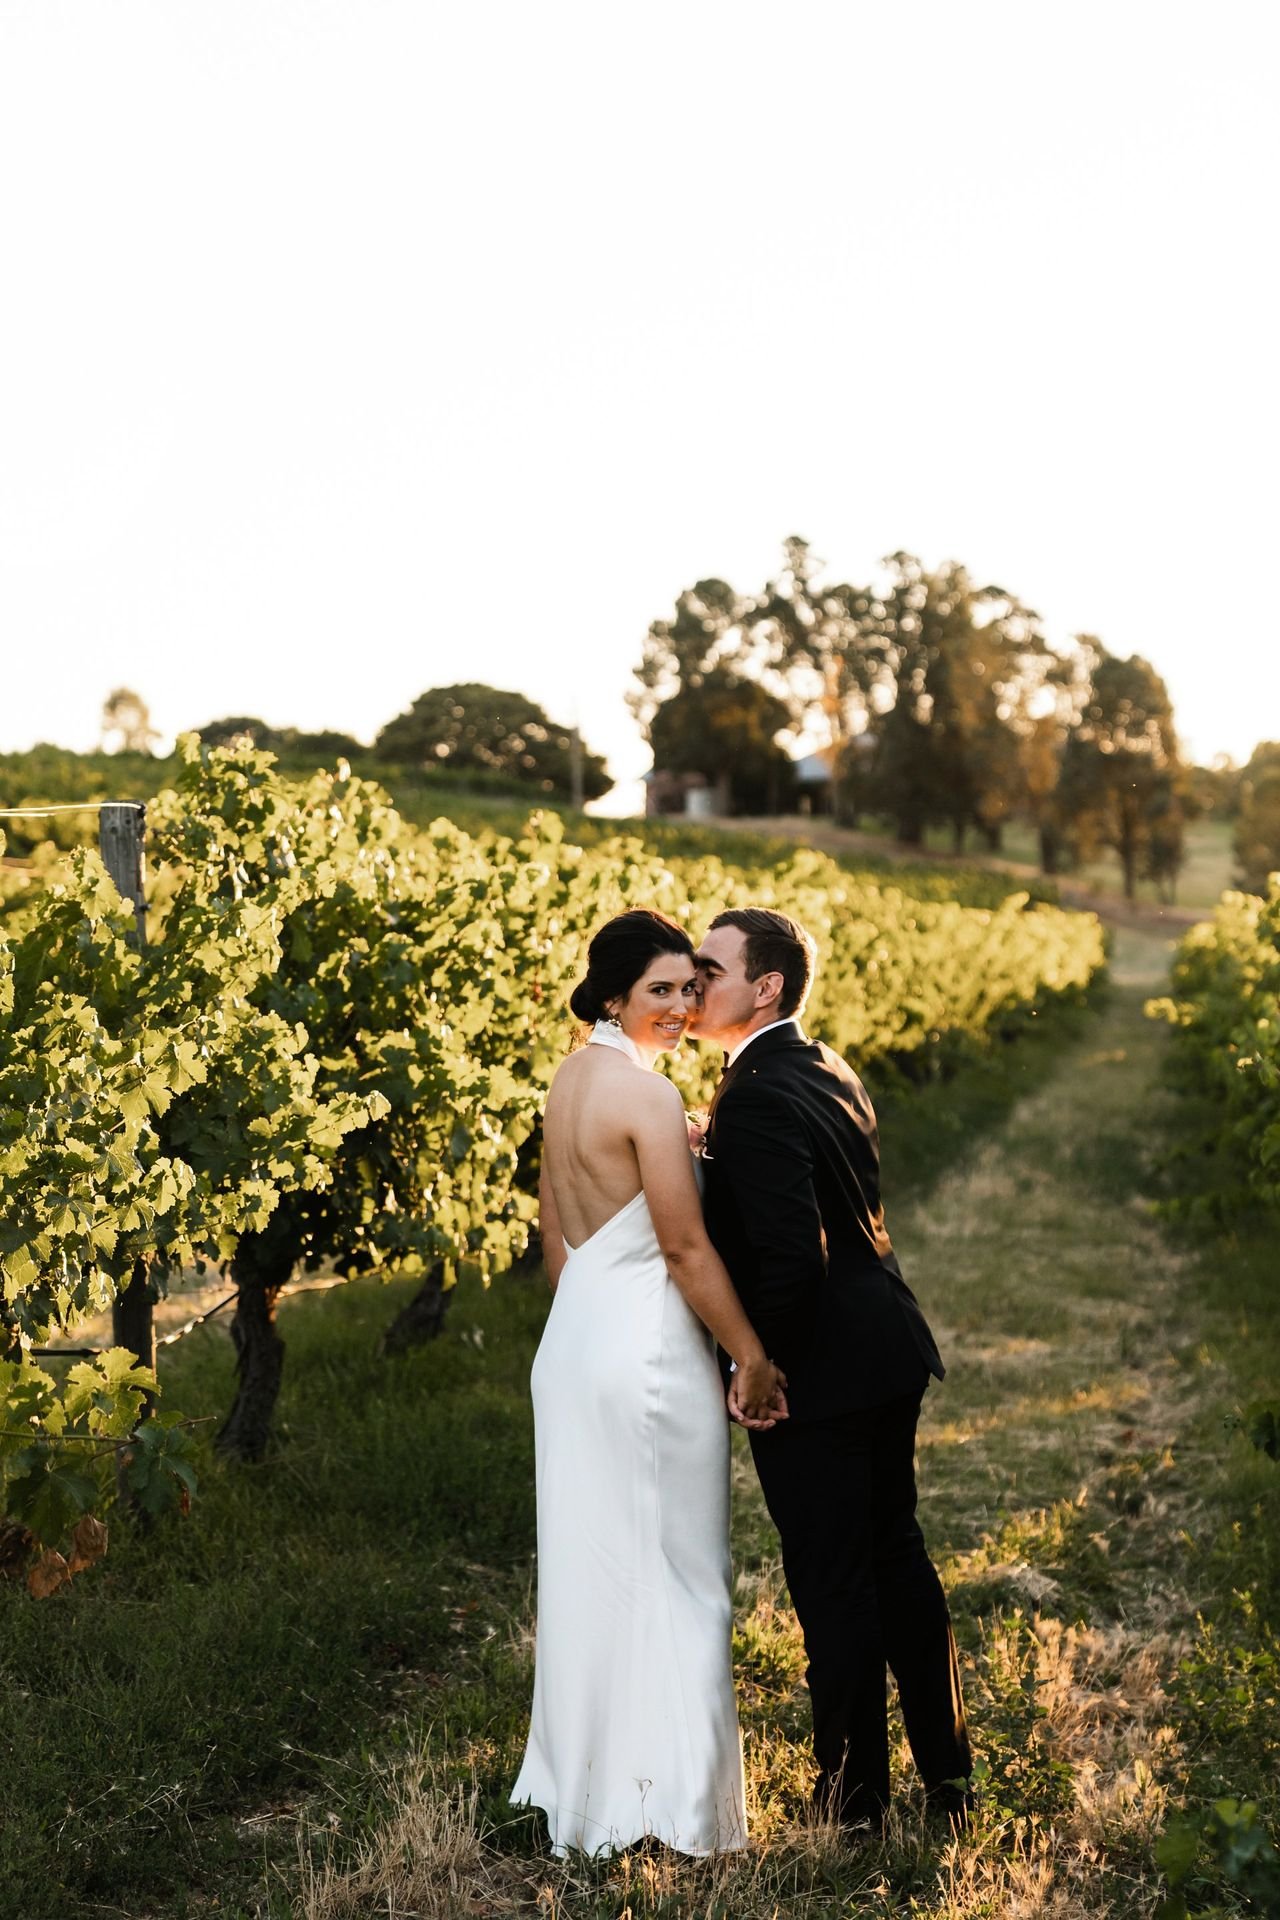 Rutherglen+Wedding+at+St+Leonards+Winery-40-1280w.jpg